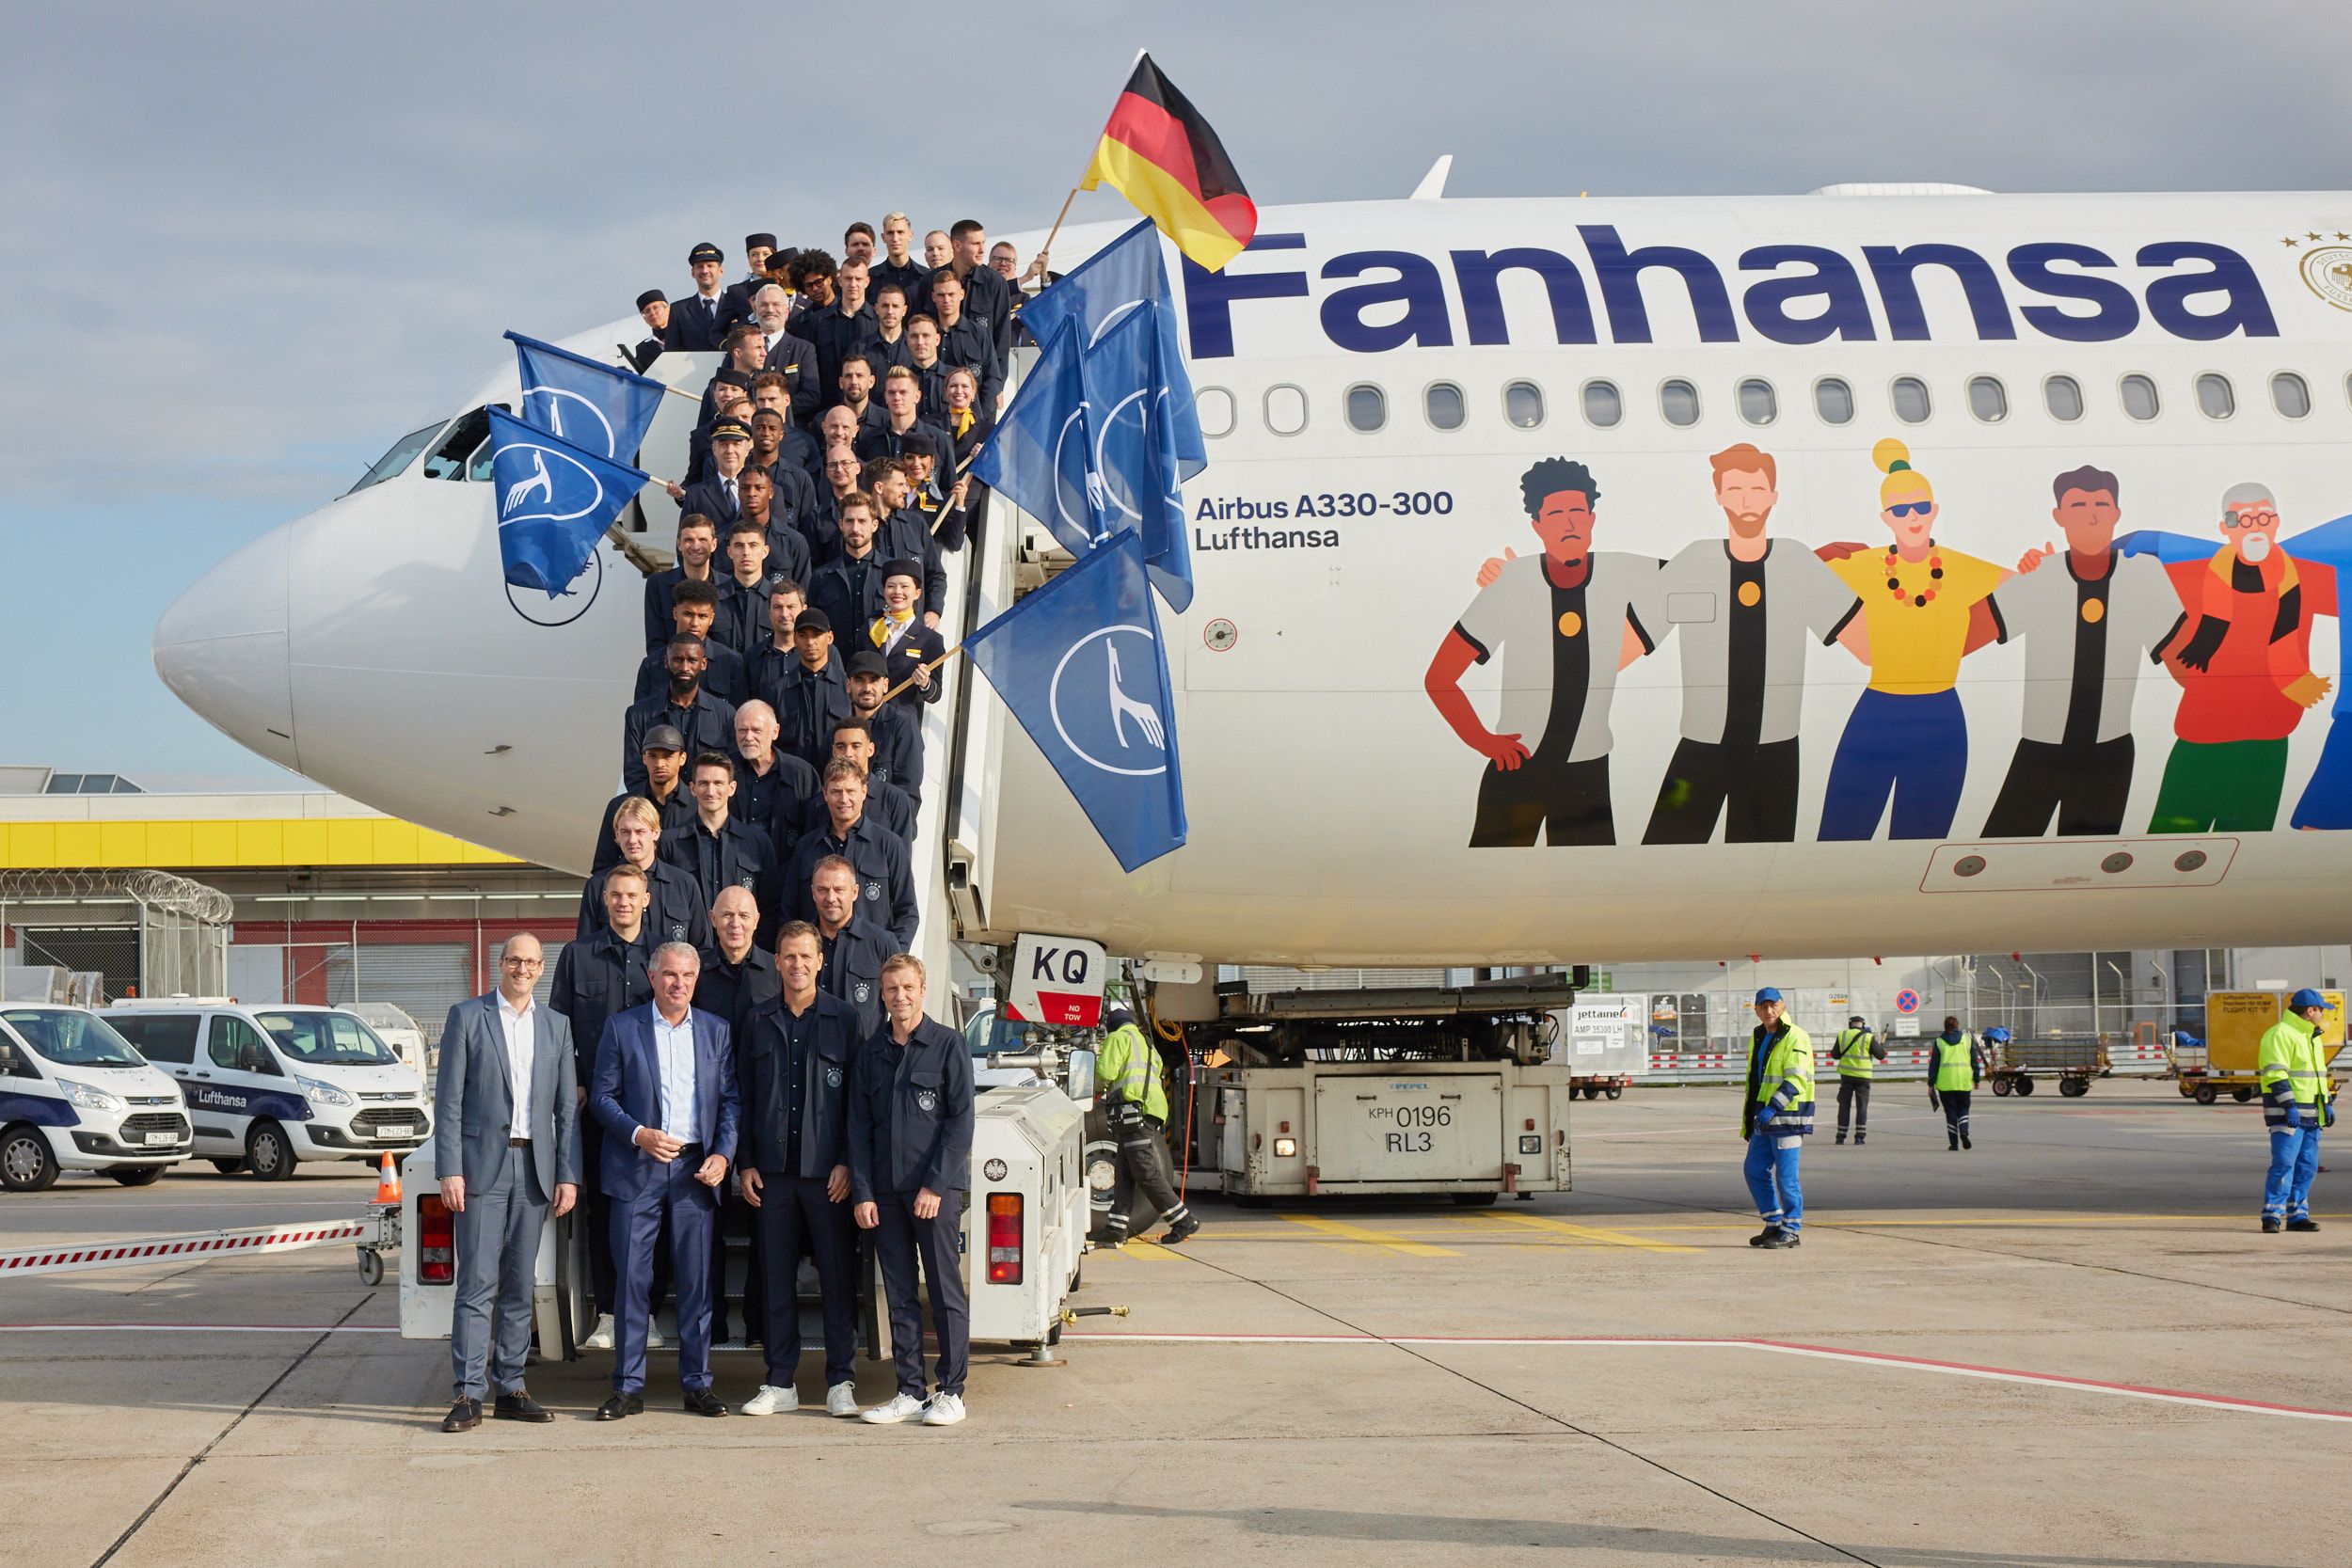 Fanhansa aircraft with German men's soccer team